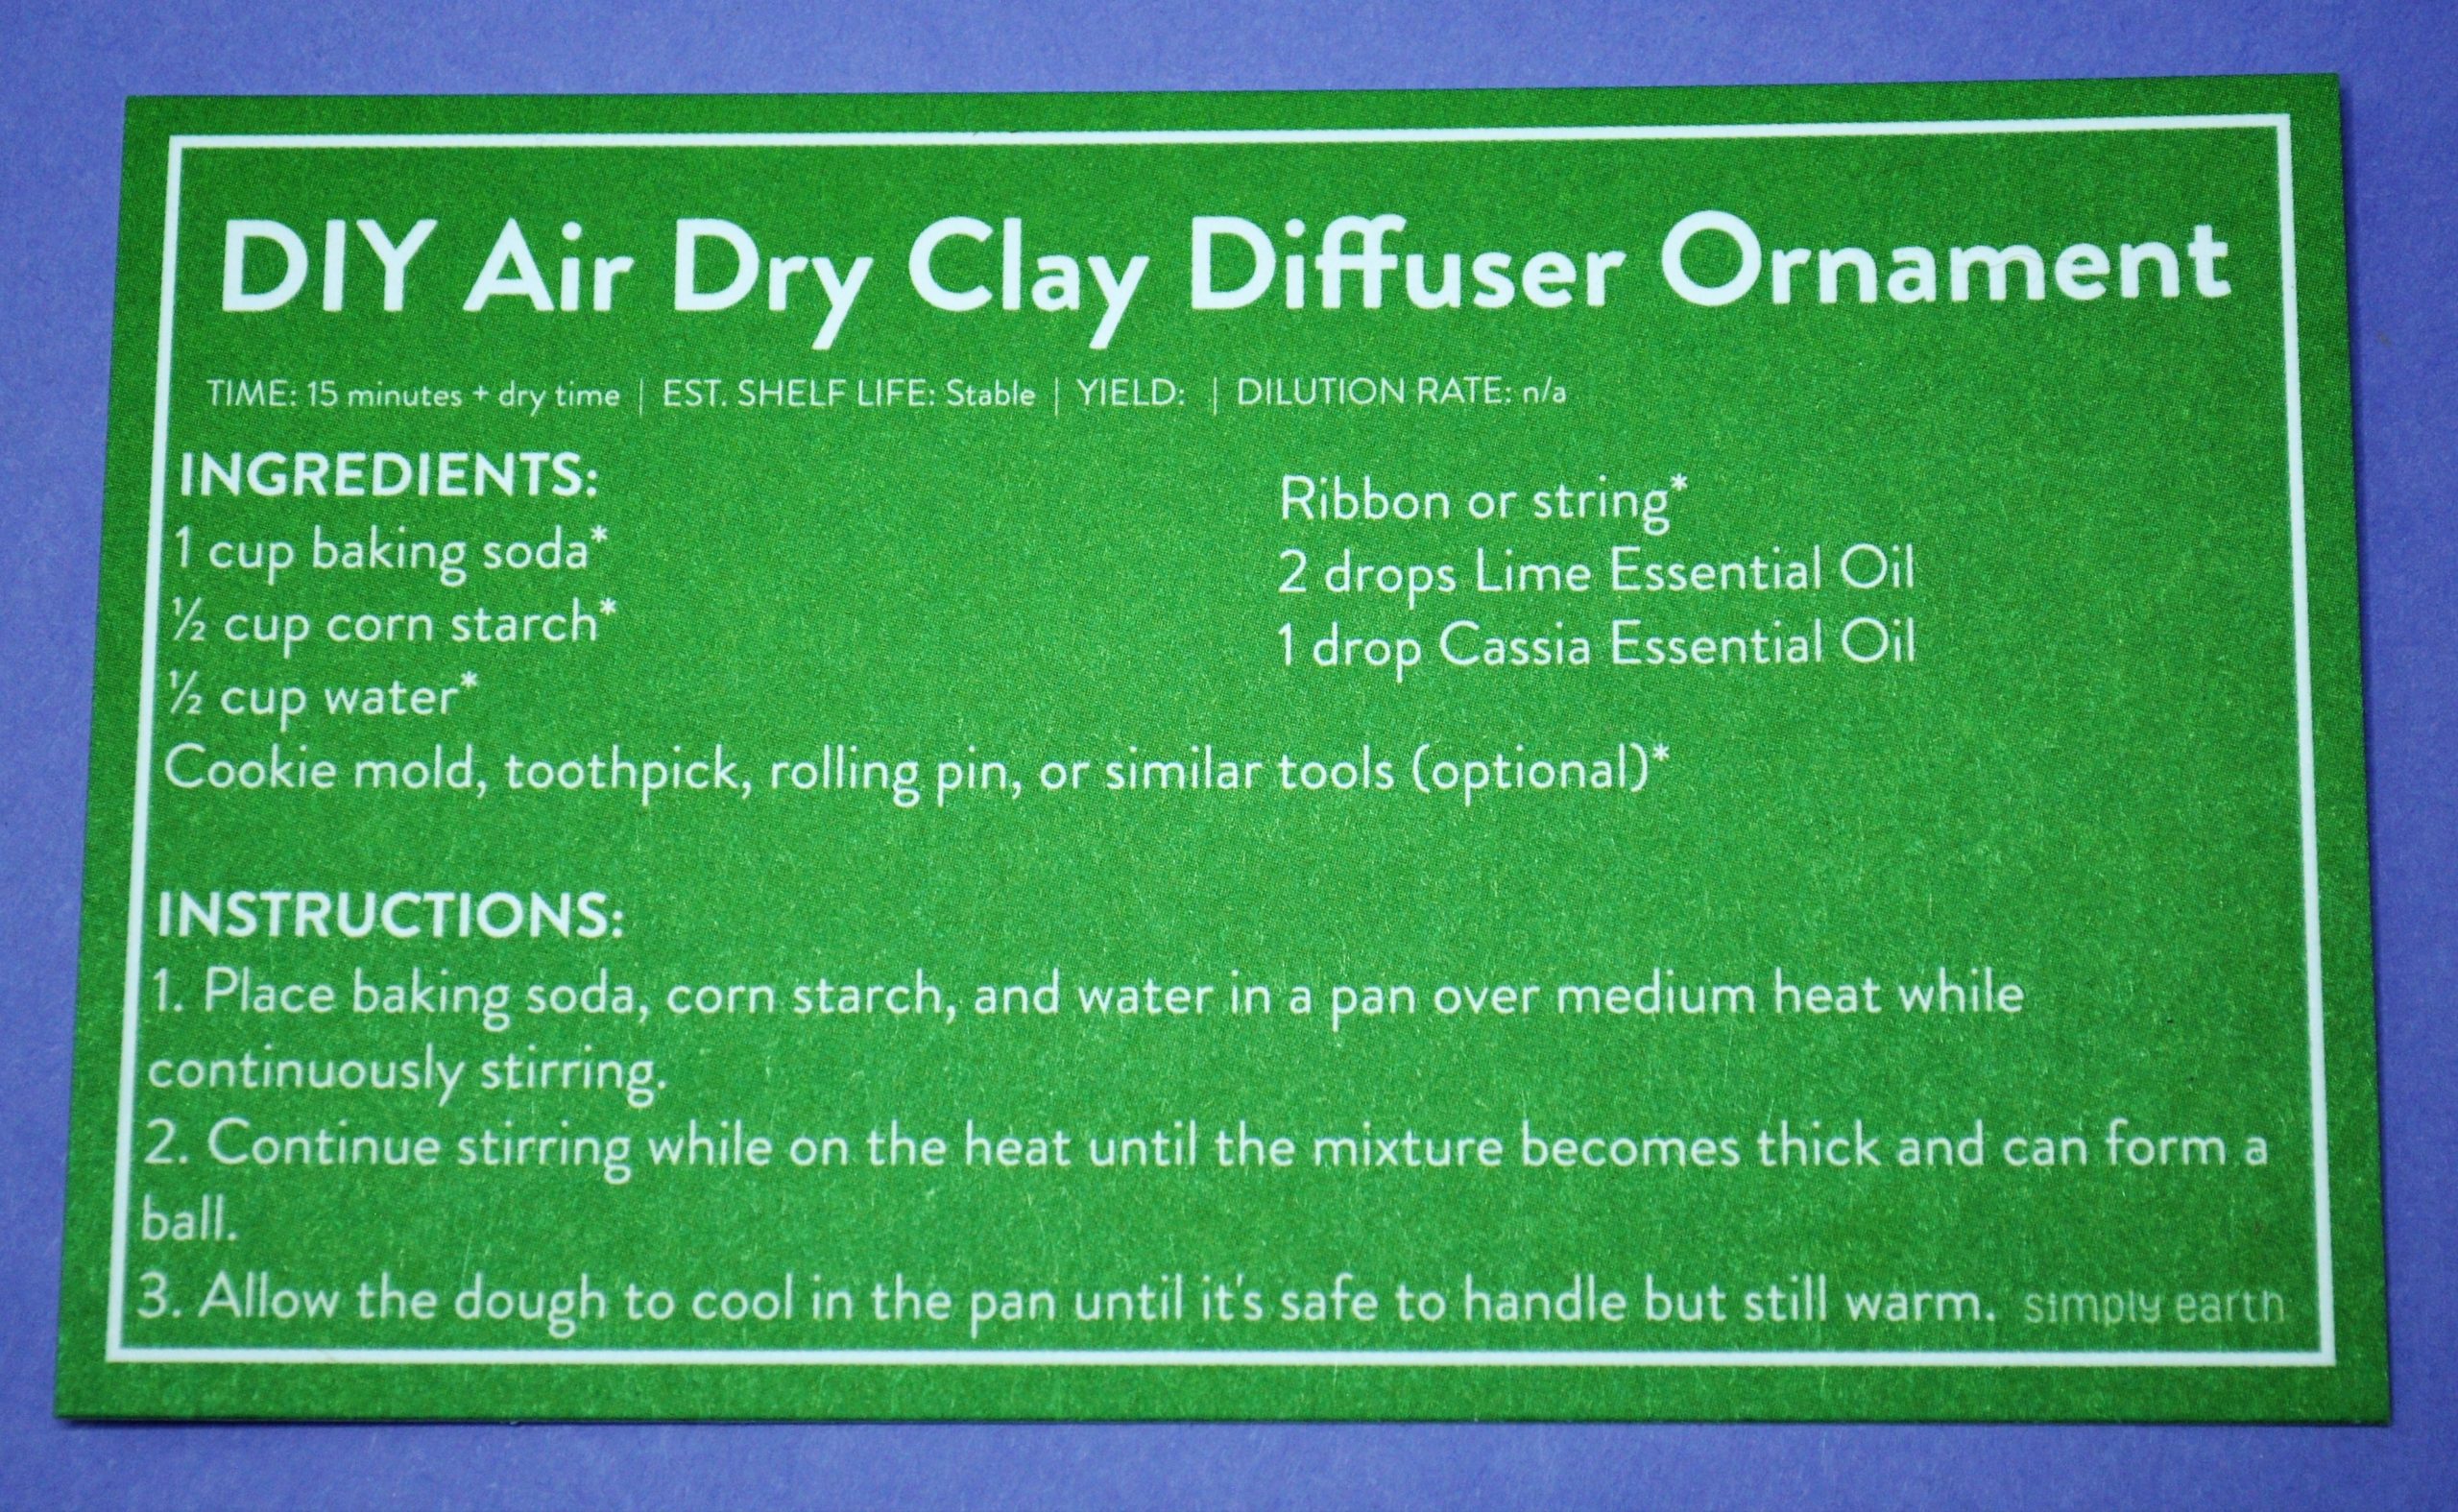 DIY Air Dry Clay Diffuser Ornament Recipe